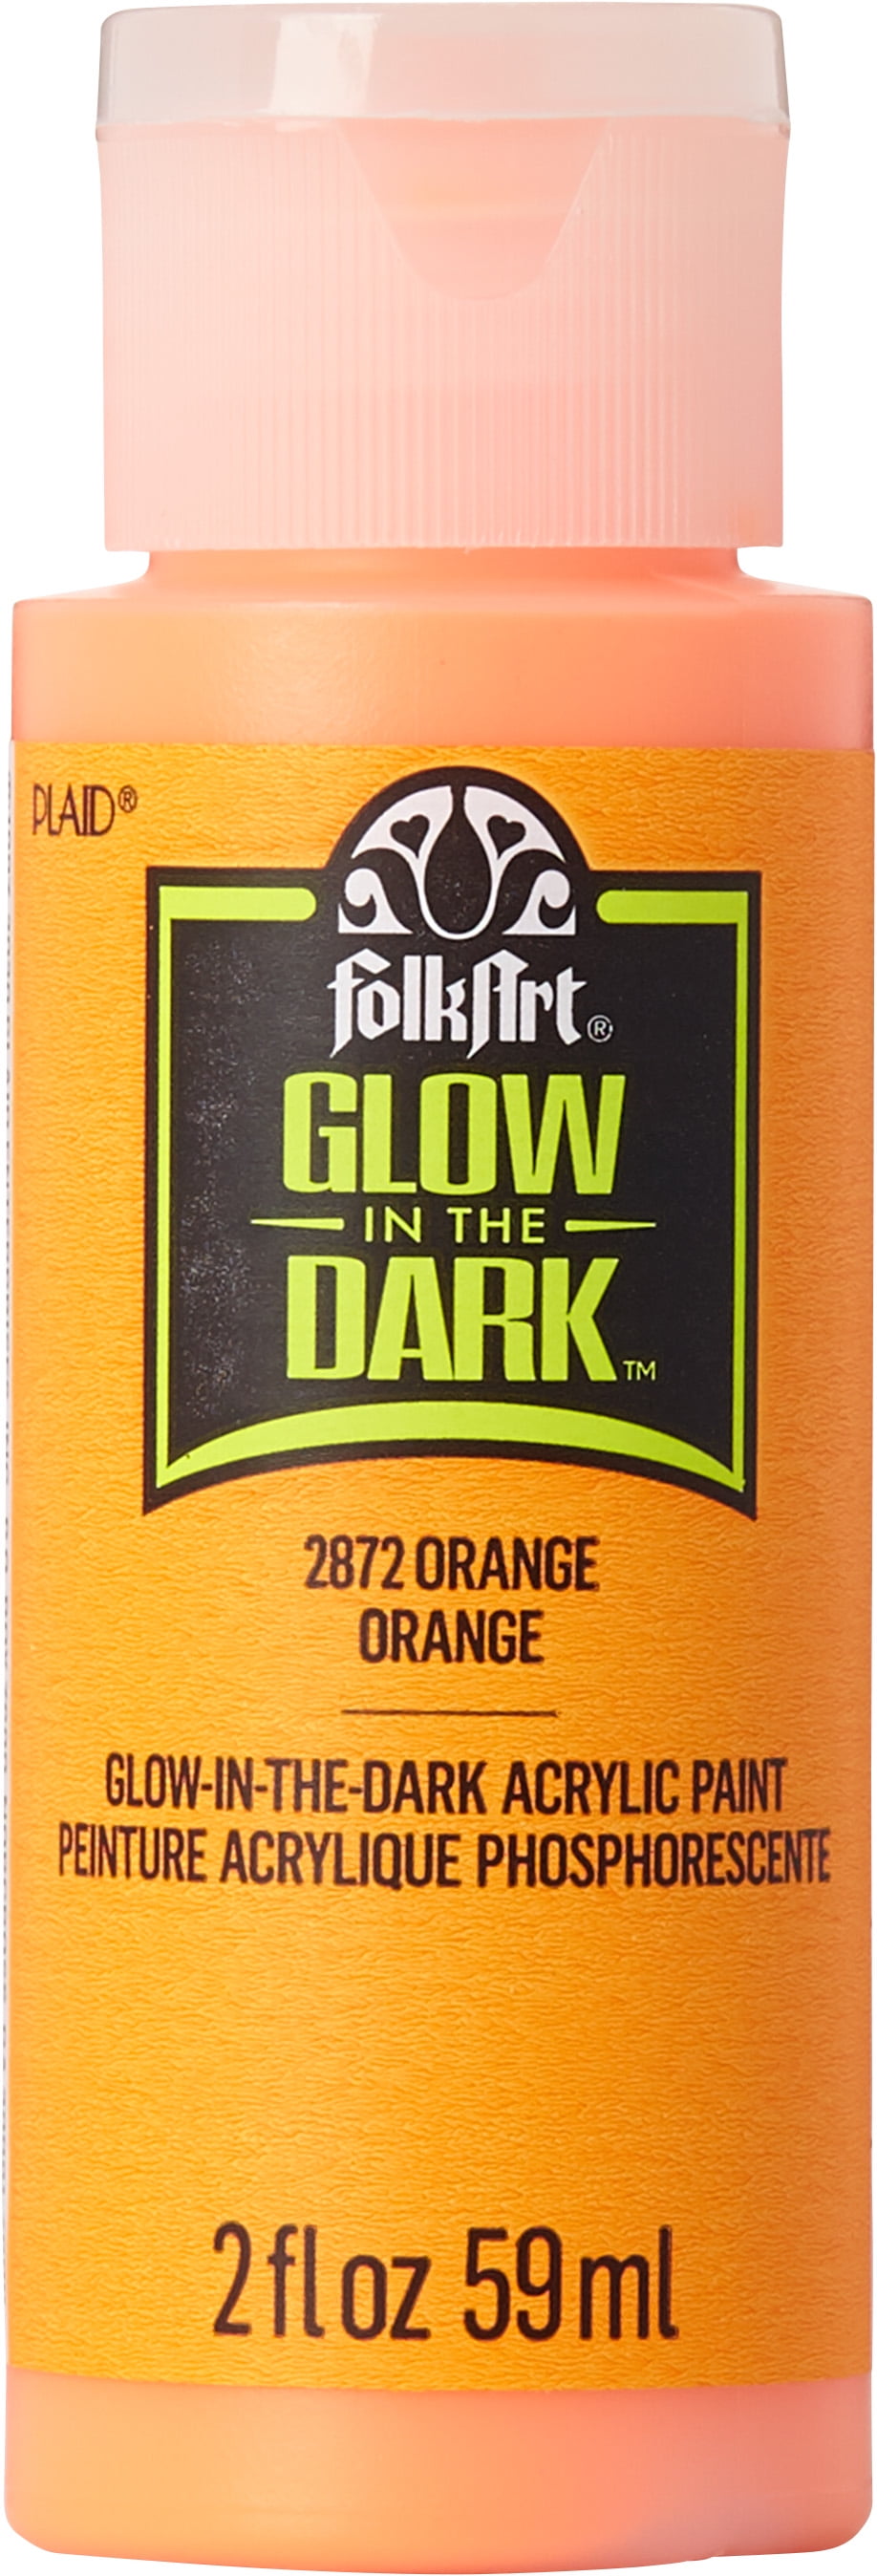 FolkArt Glow-in-the-Dark Acrylic Craft Paint, Matte Finish, Orange, 2 fl oz